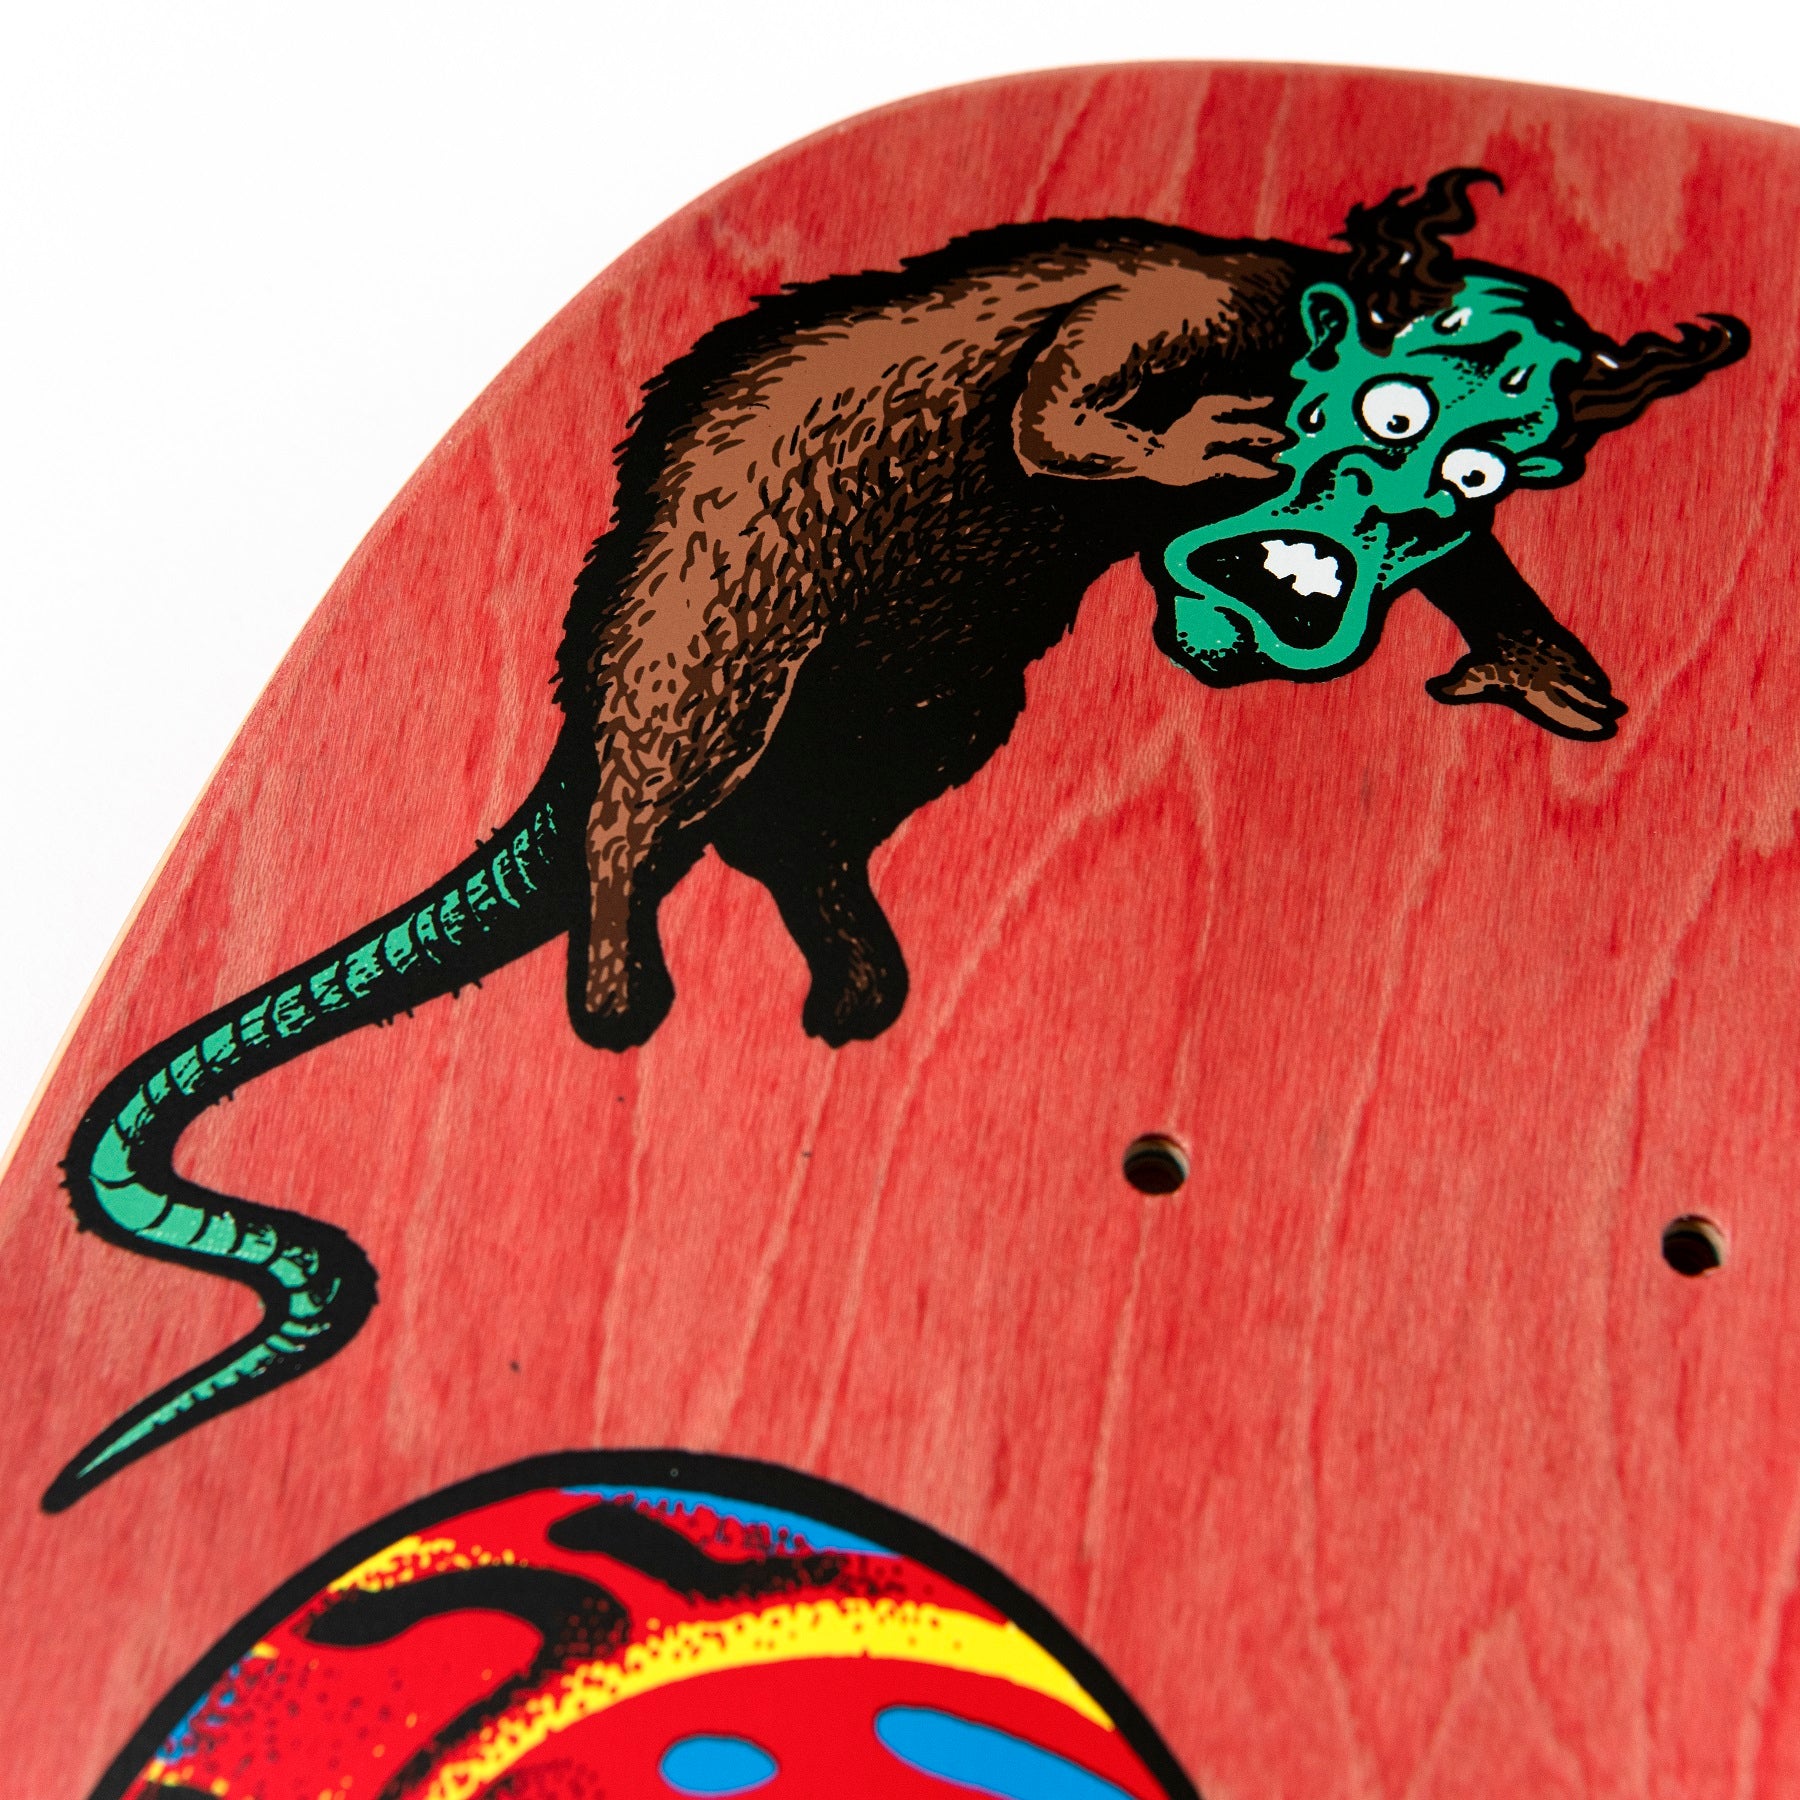 Santa Cruz Jeff Kendall Snake Reissue 9.975 x 30.125" Skateboard Deck - Invisible Board Shop